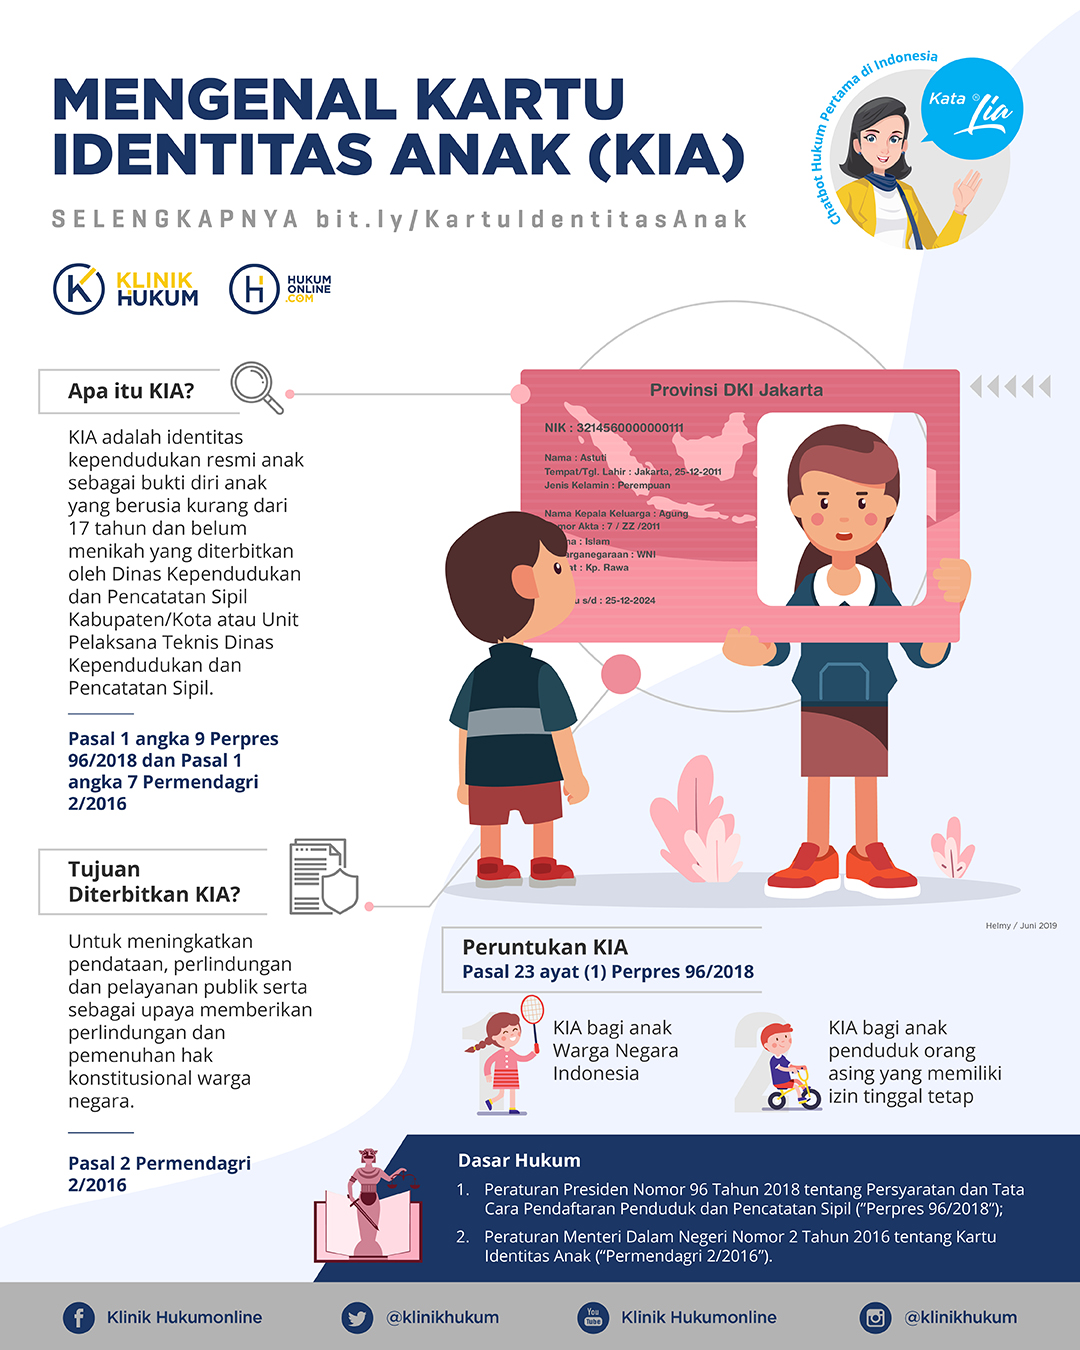 Mengenal Kartu Identitas Anak (KIA)